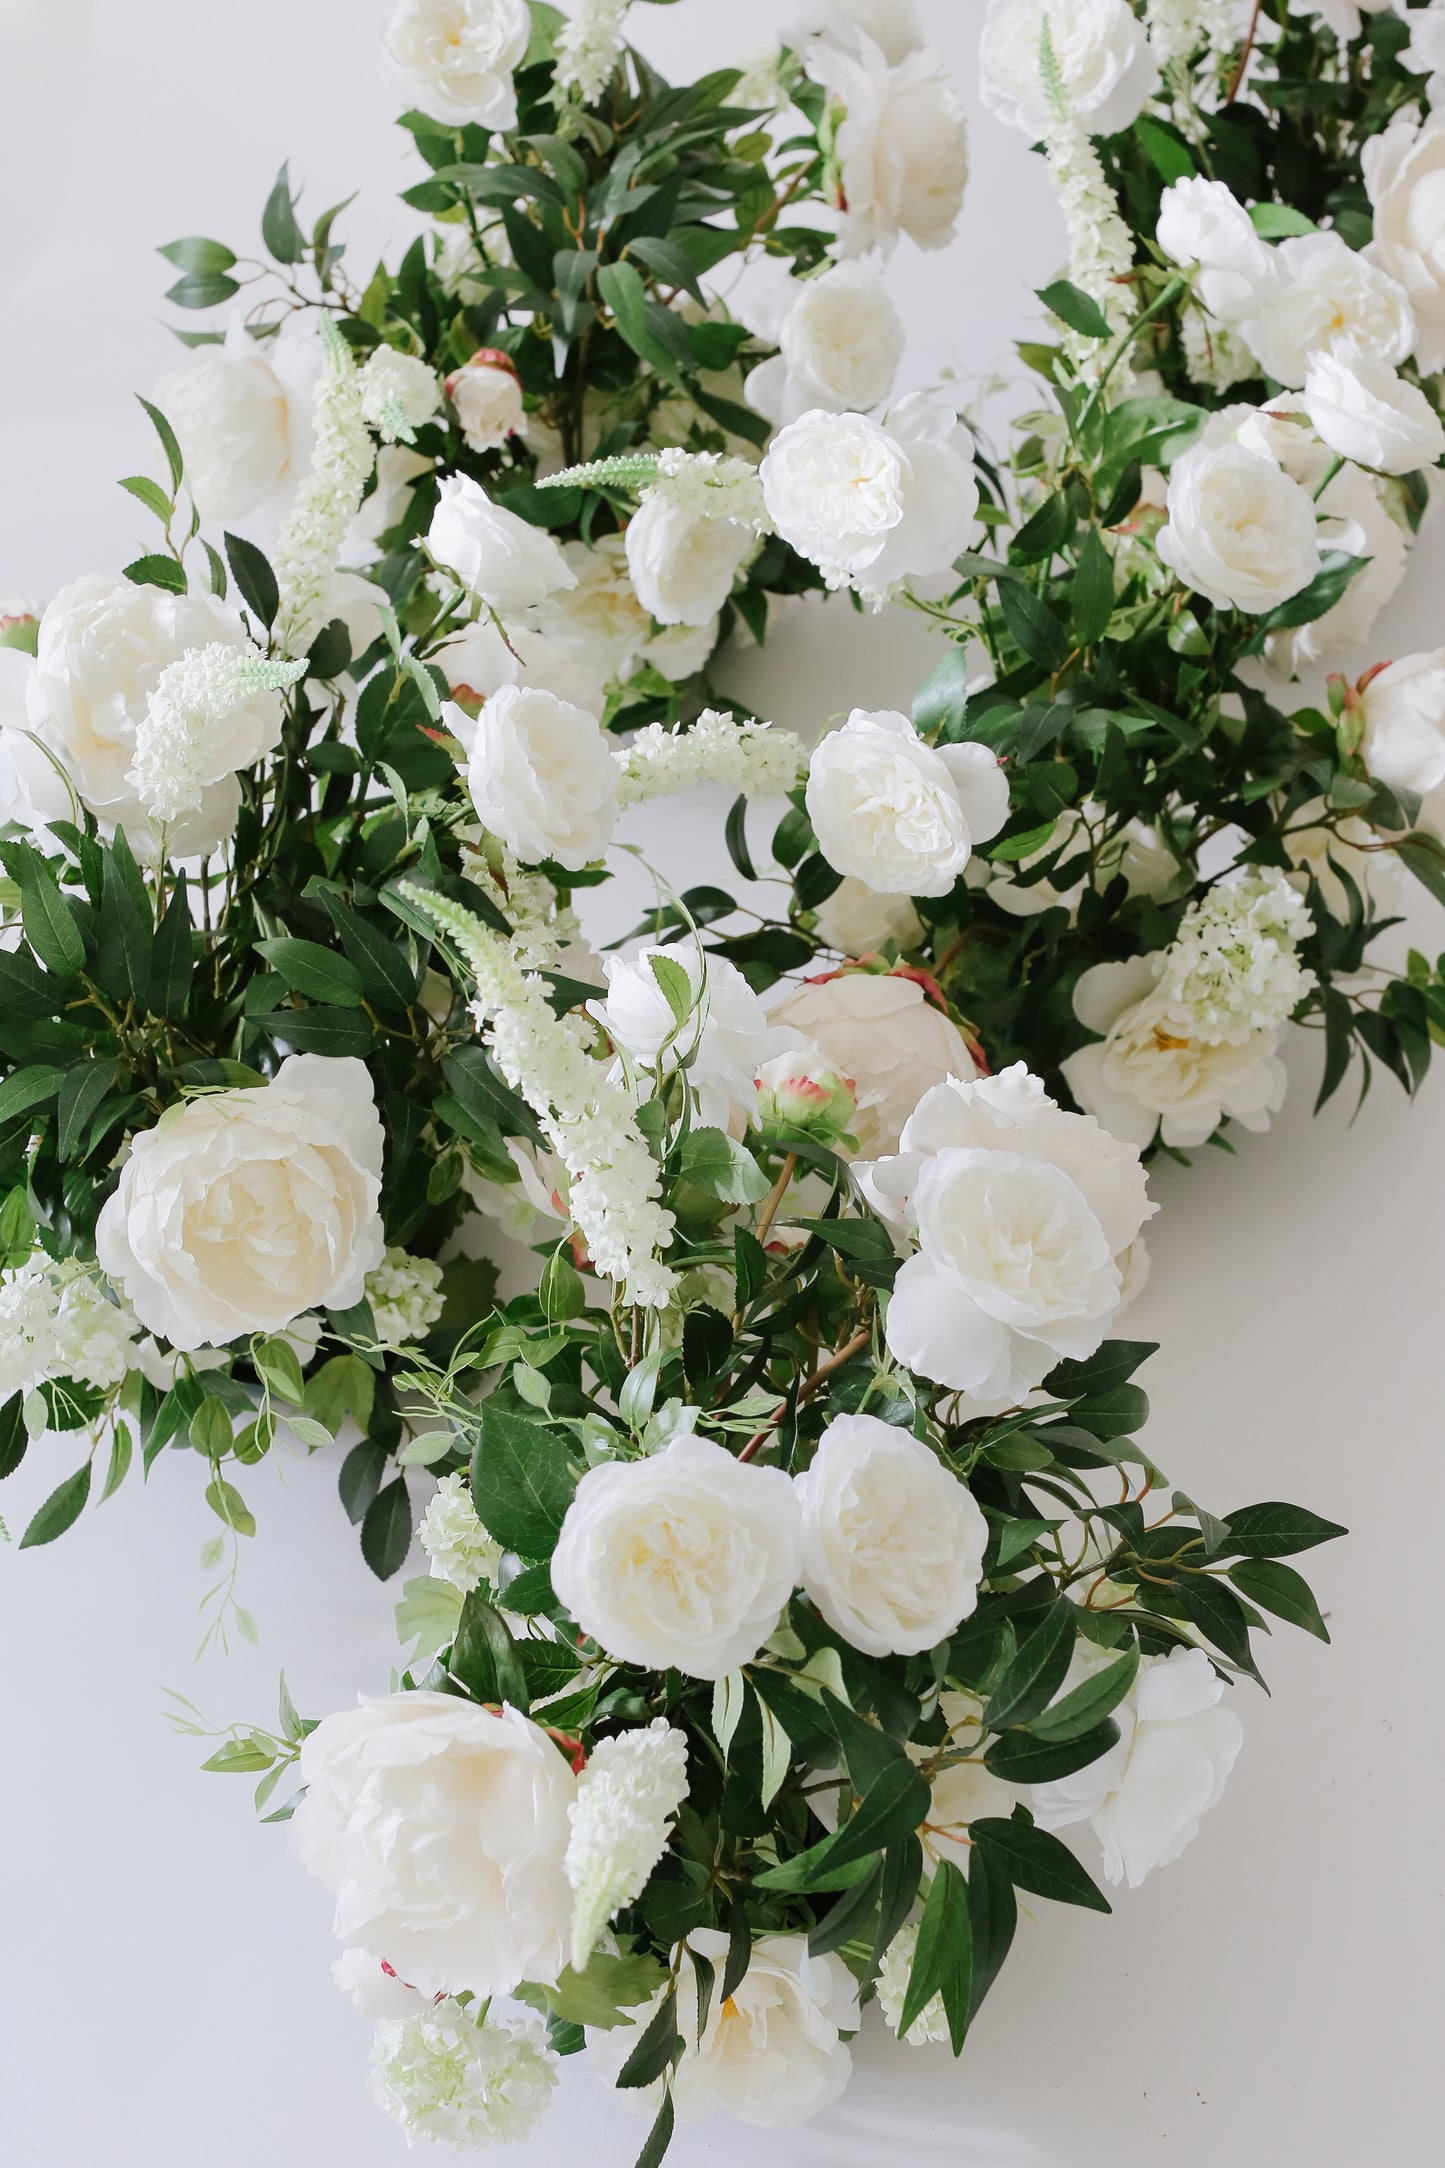 The Romantic Aisle Flowers - Set of 10